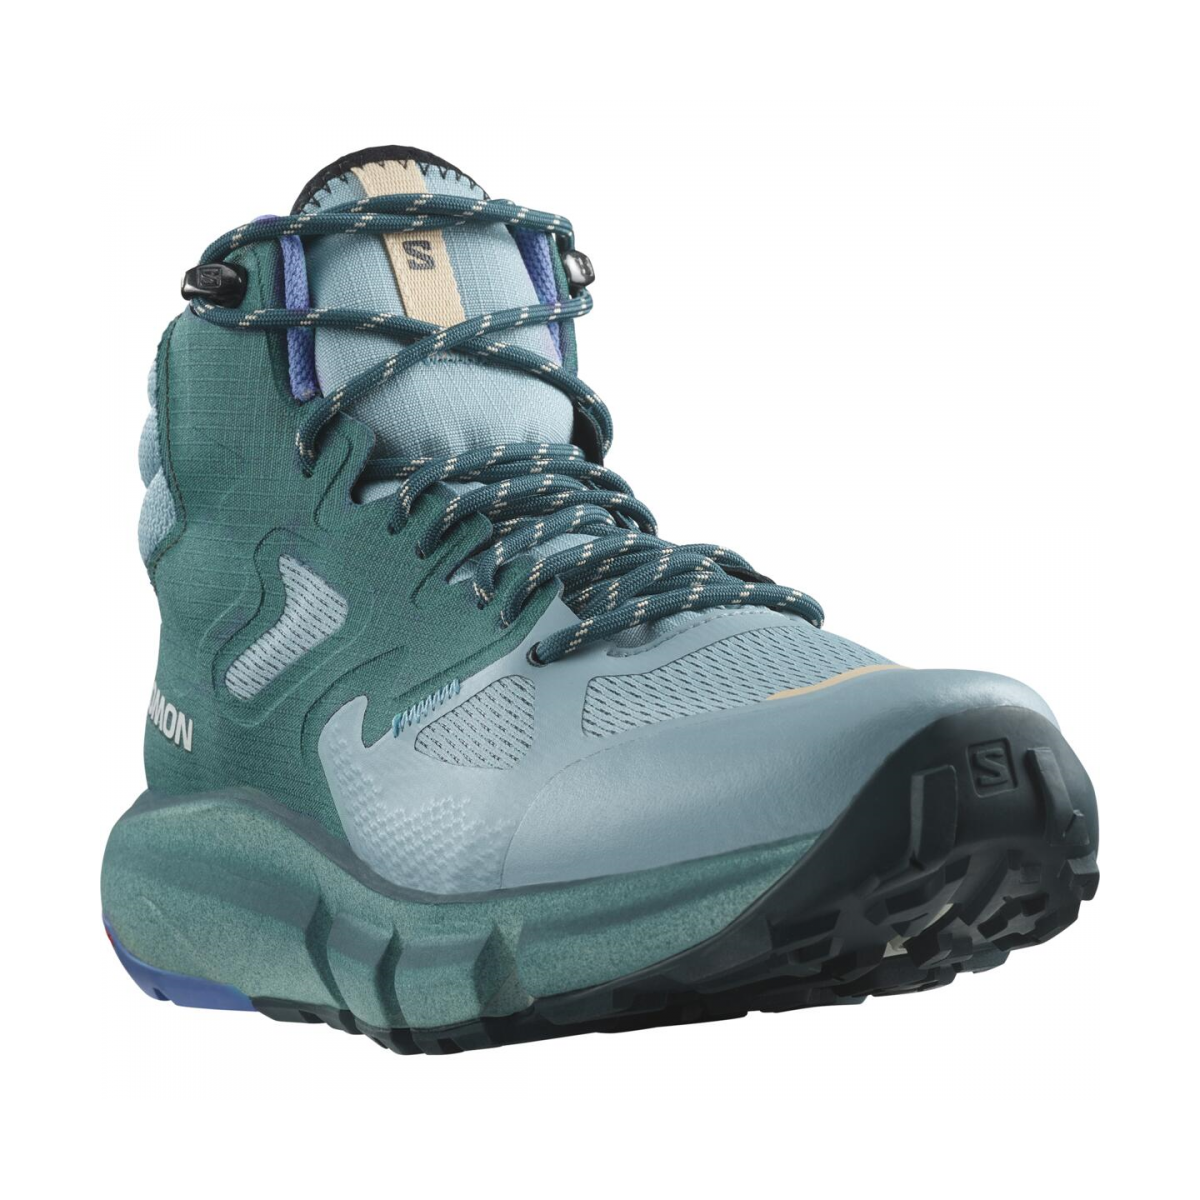 SALOMON PREDICT HIKE MID GORE-TEX W Hiking Boots - green/blue